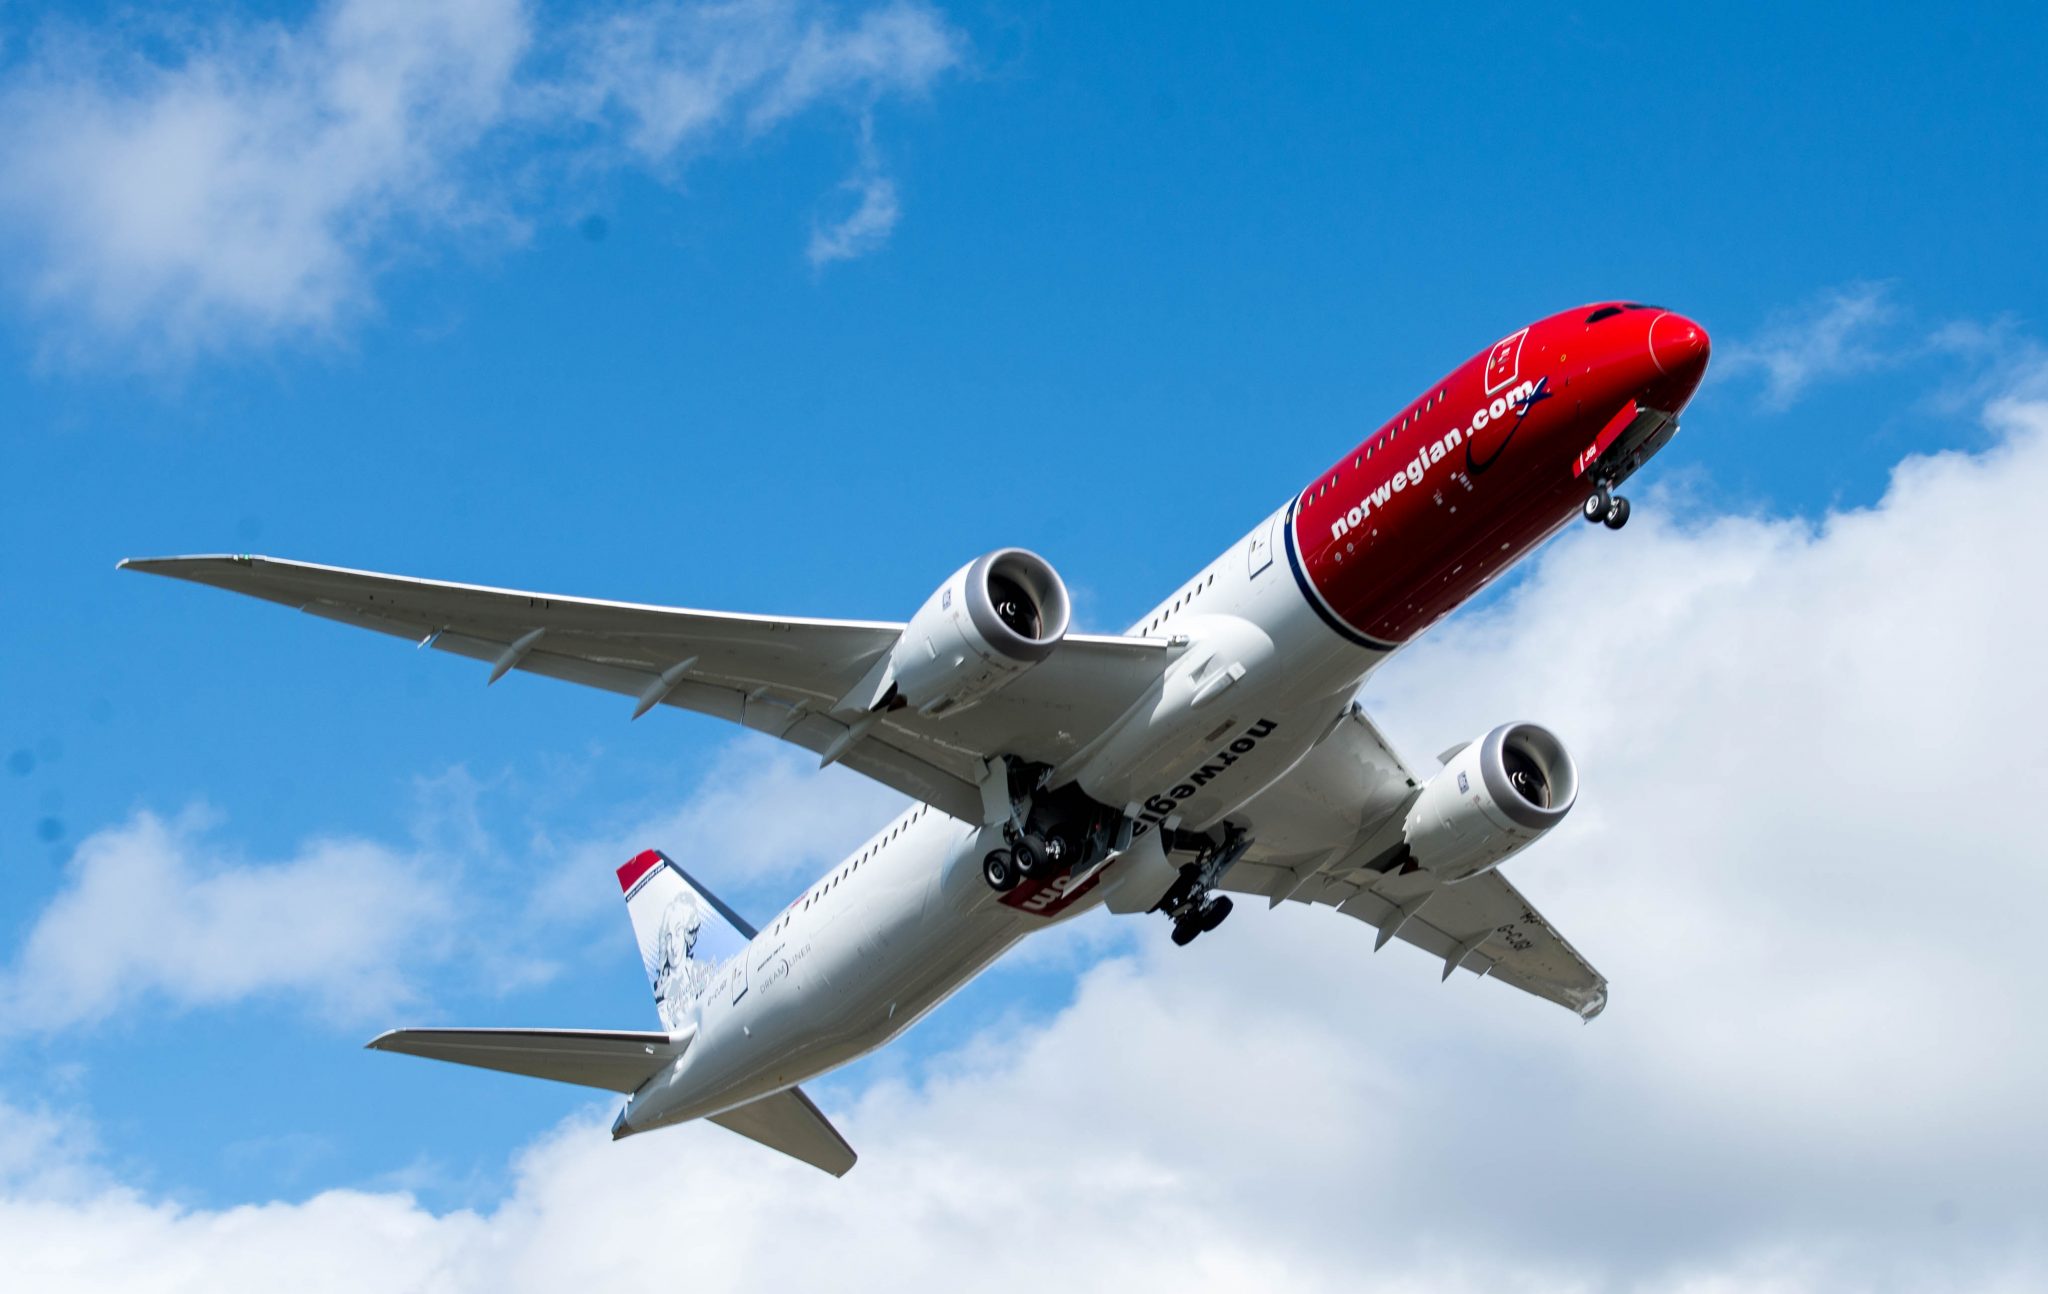 Norwegian reports July passenger figures and load factors